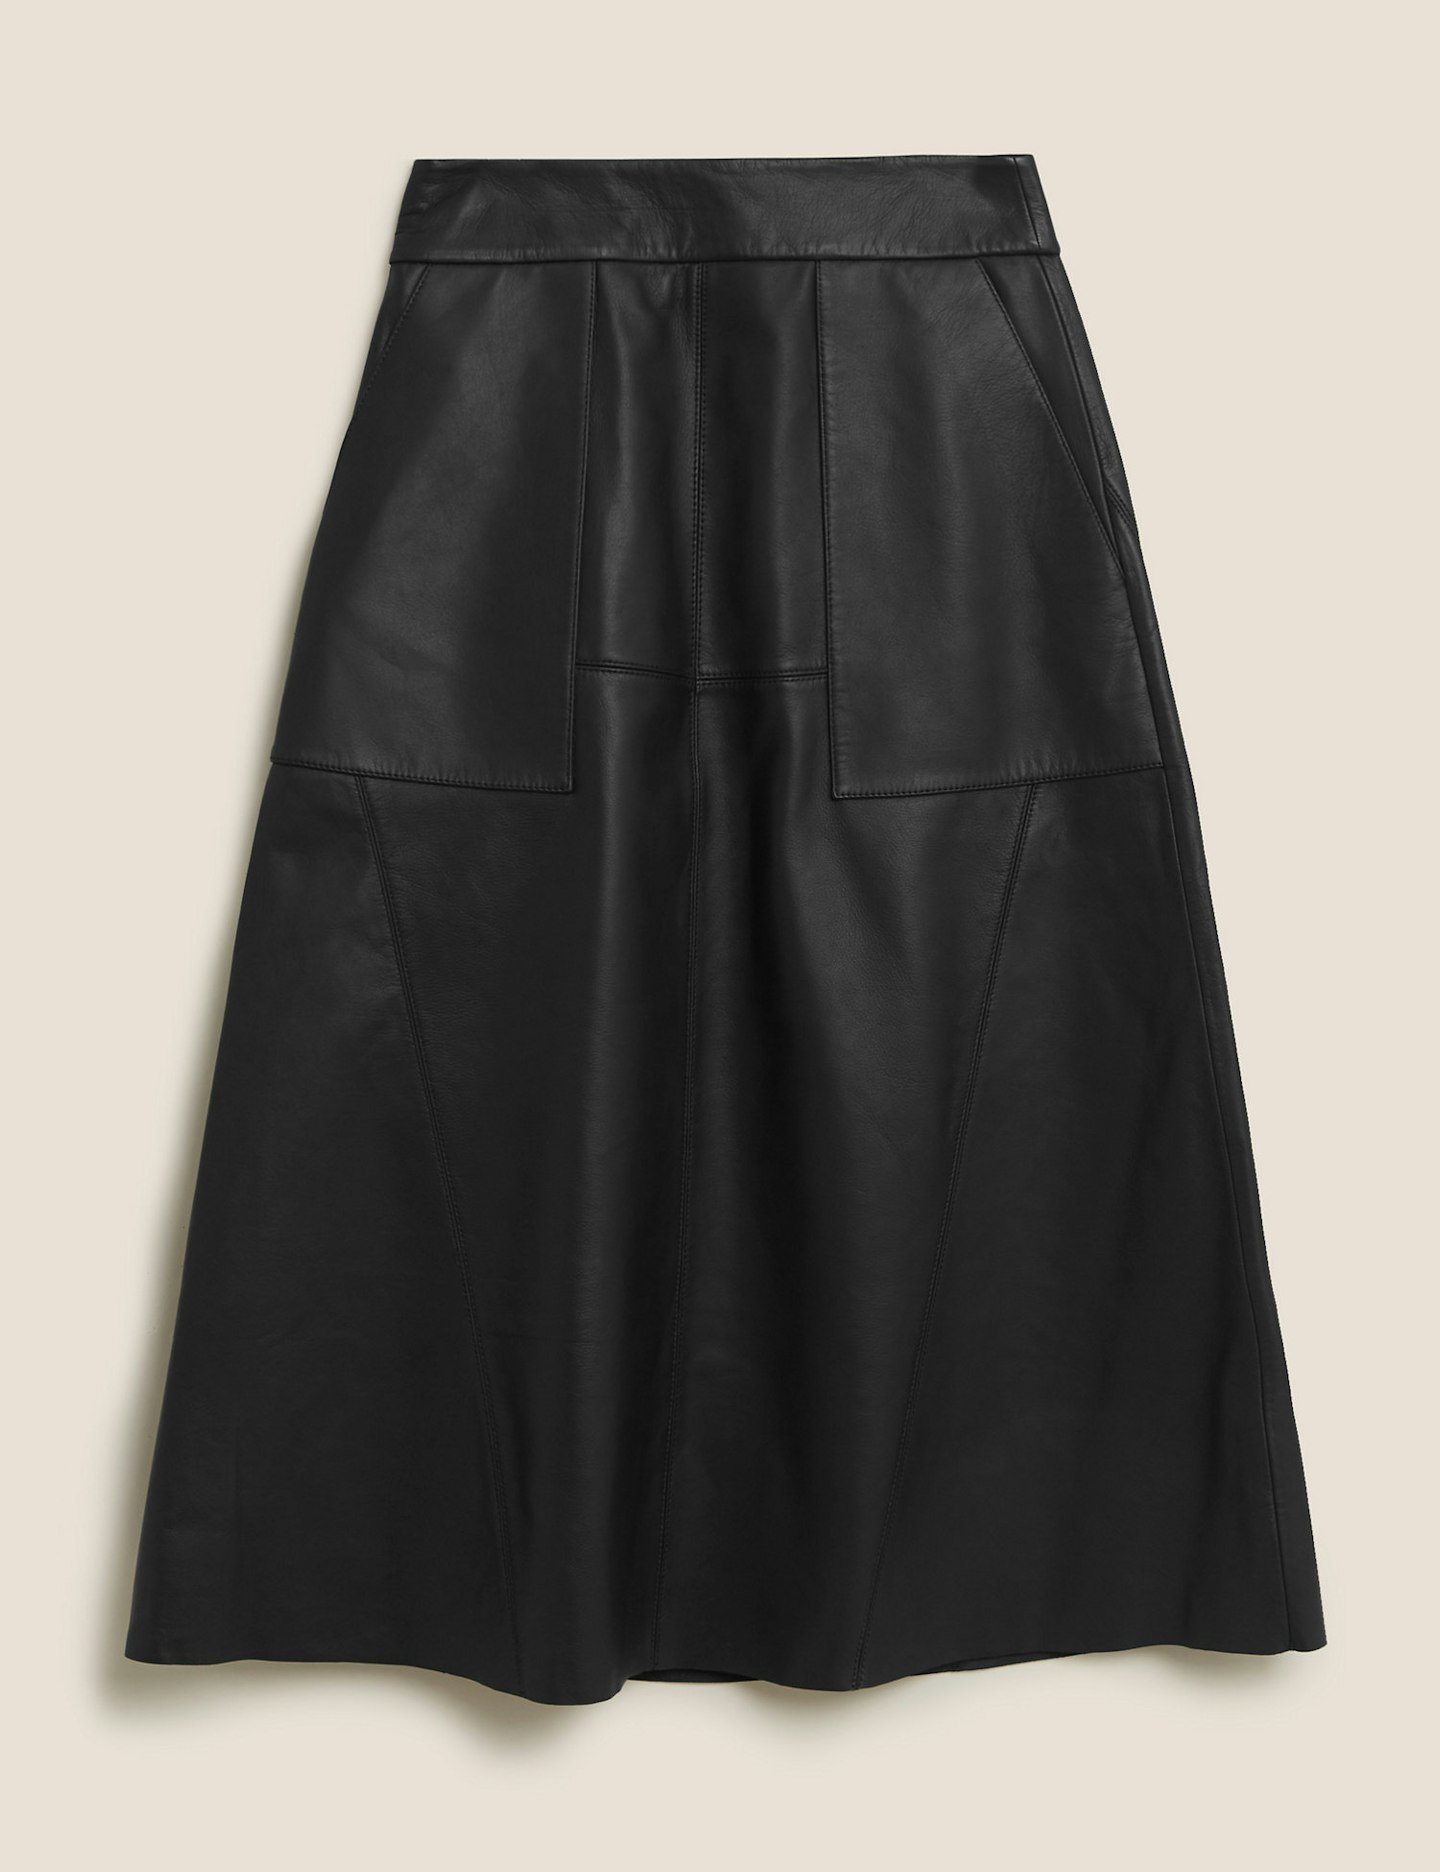 M&S, Leather Midi Skirt, £199